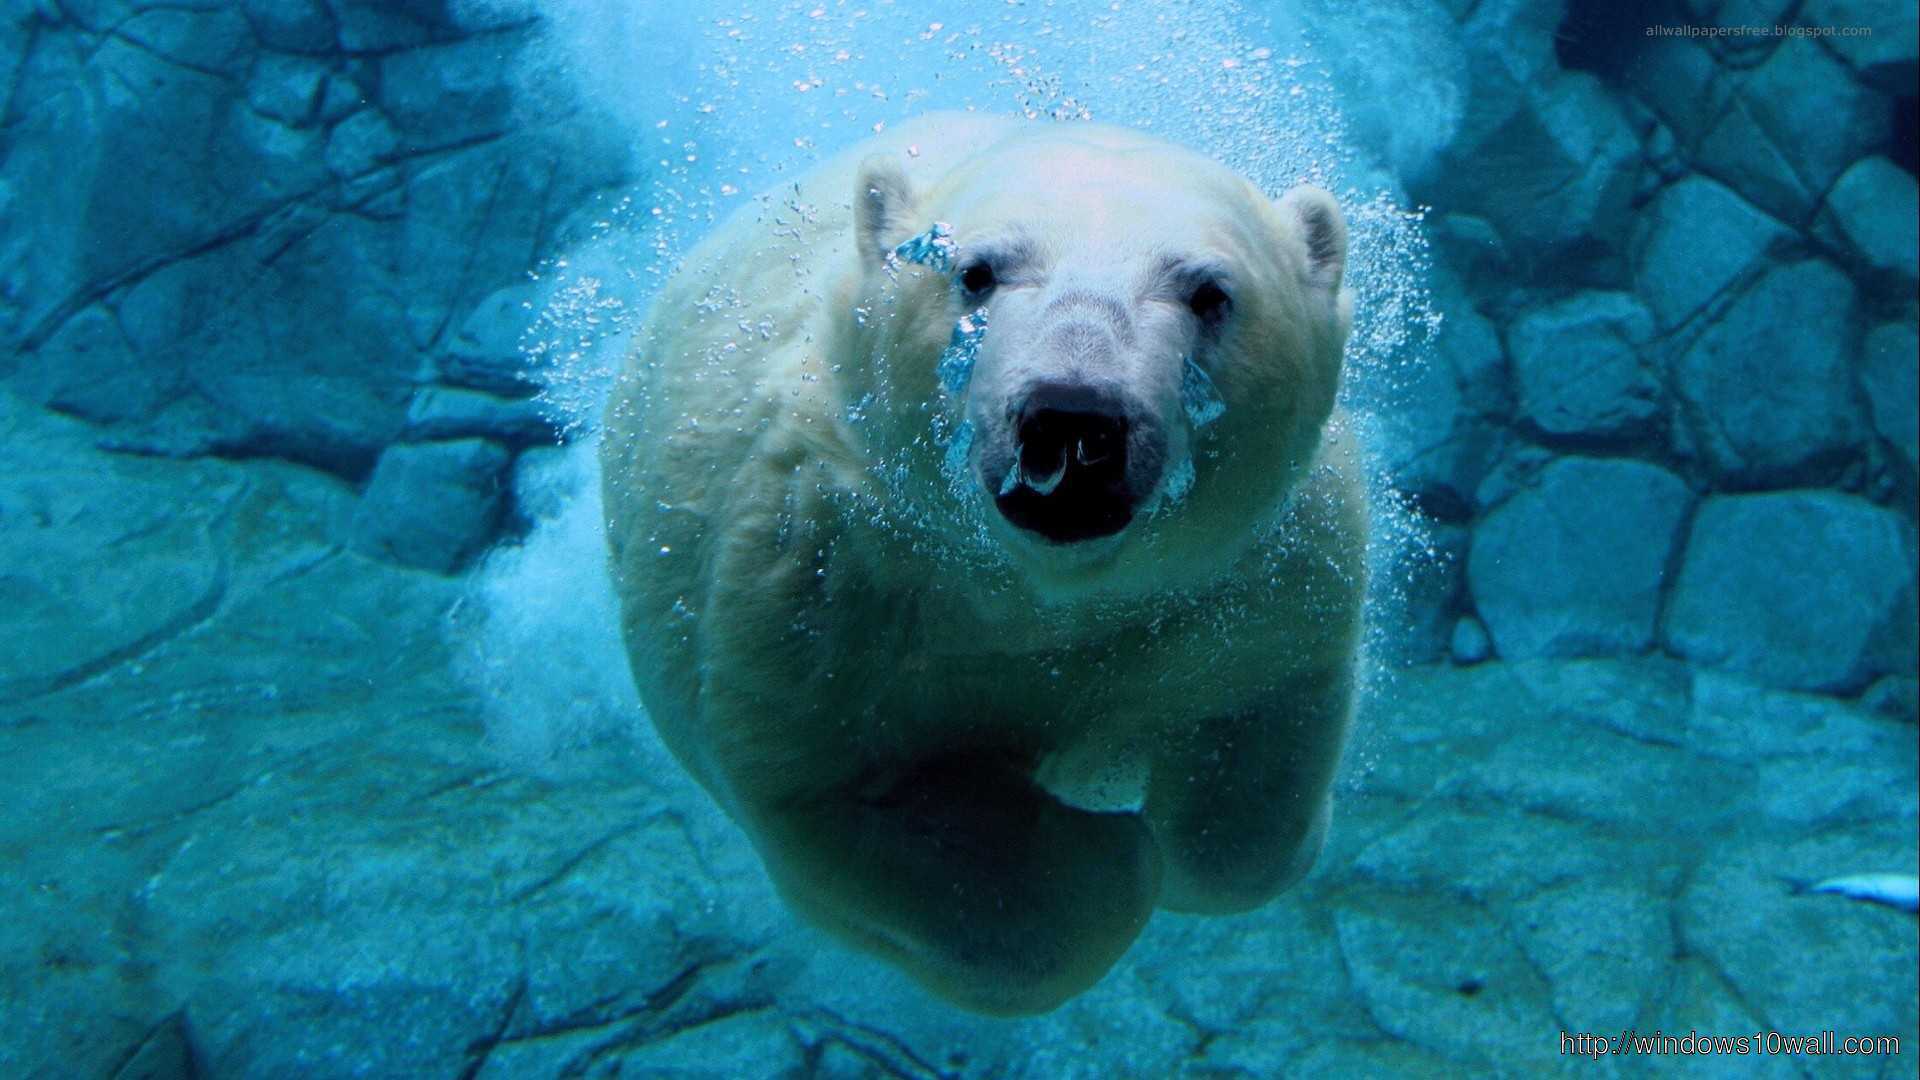 white bear in water background wallpaper hd 1080p